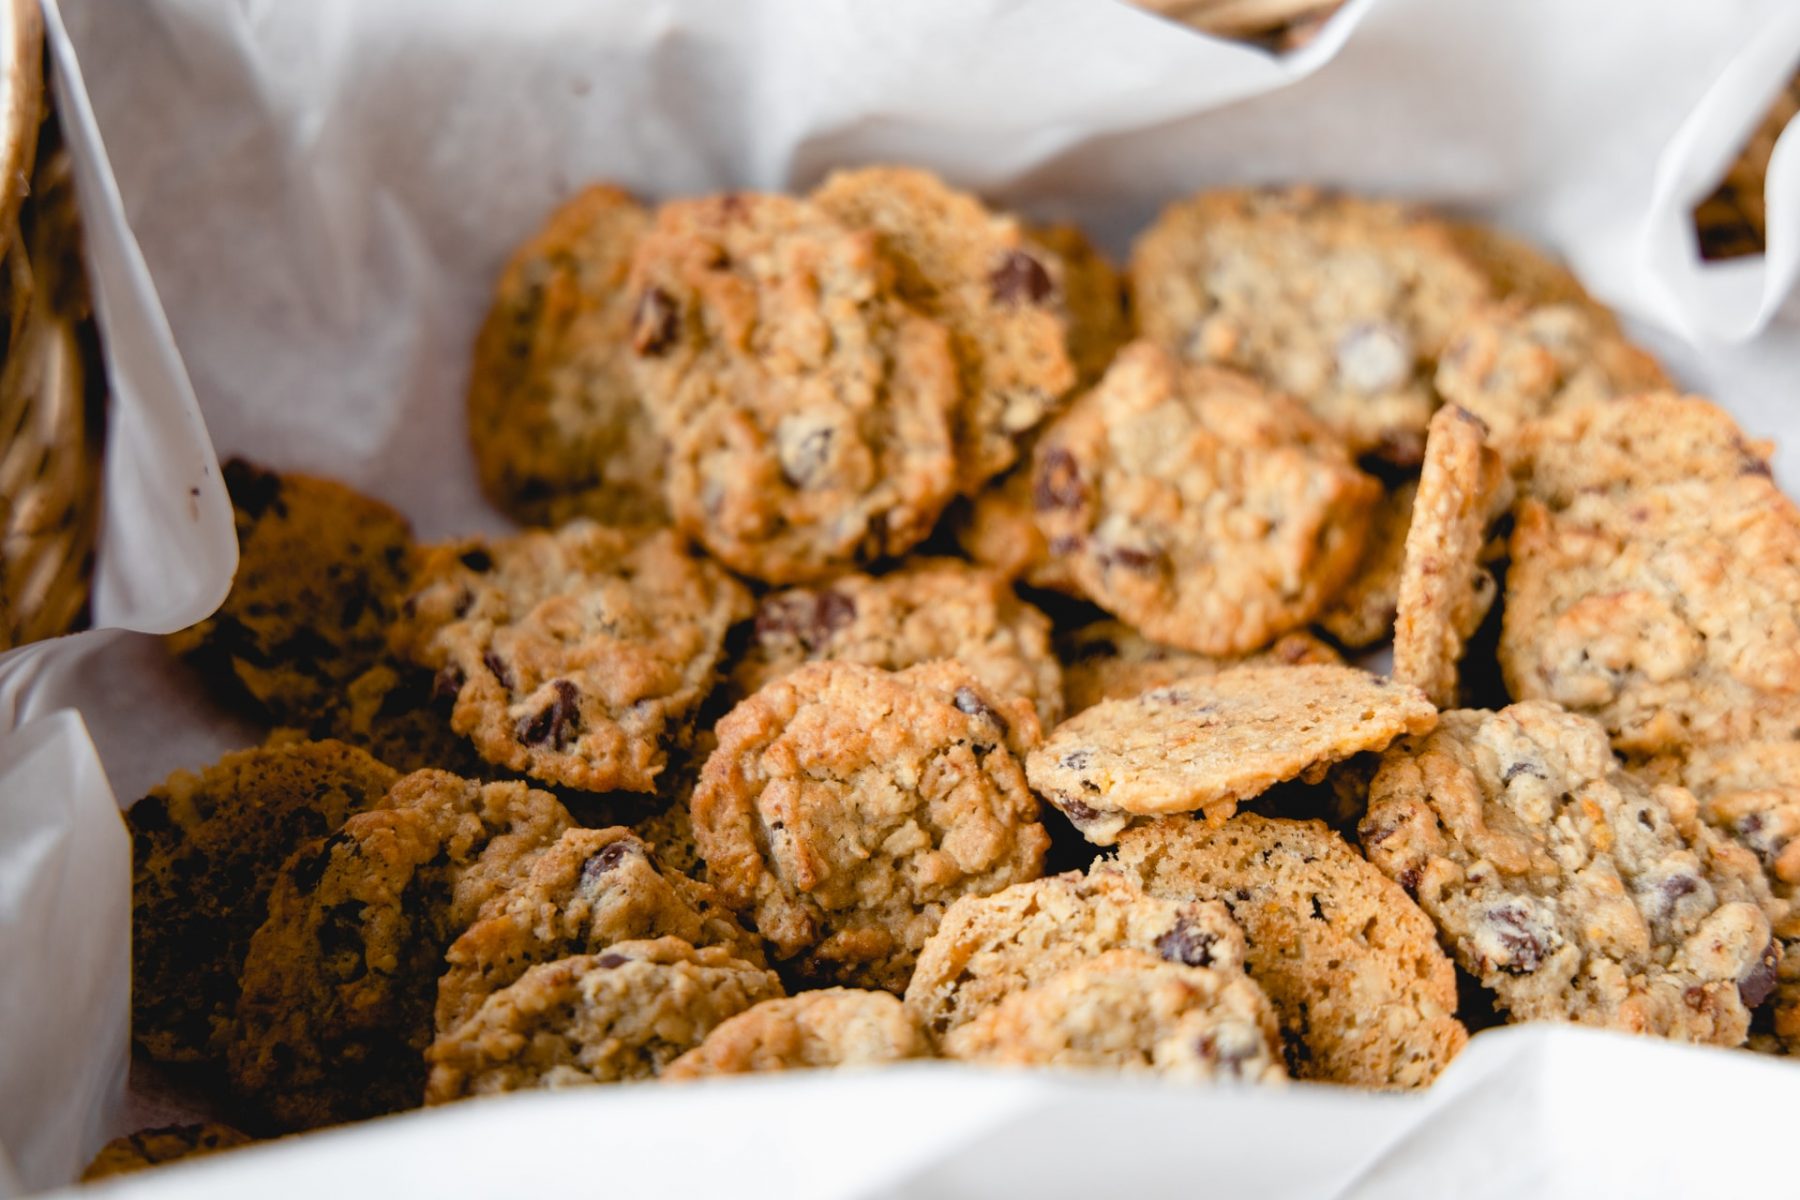 Vegan cookies: Υγιεινά μπισκότα με βρώμη, σταφίδες και αμύγδαλα